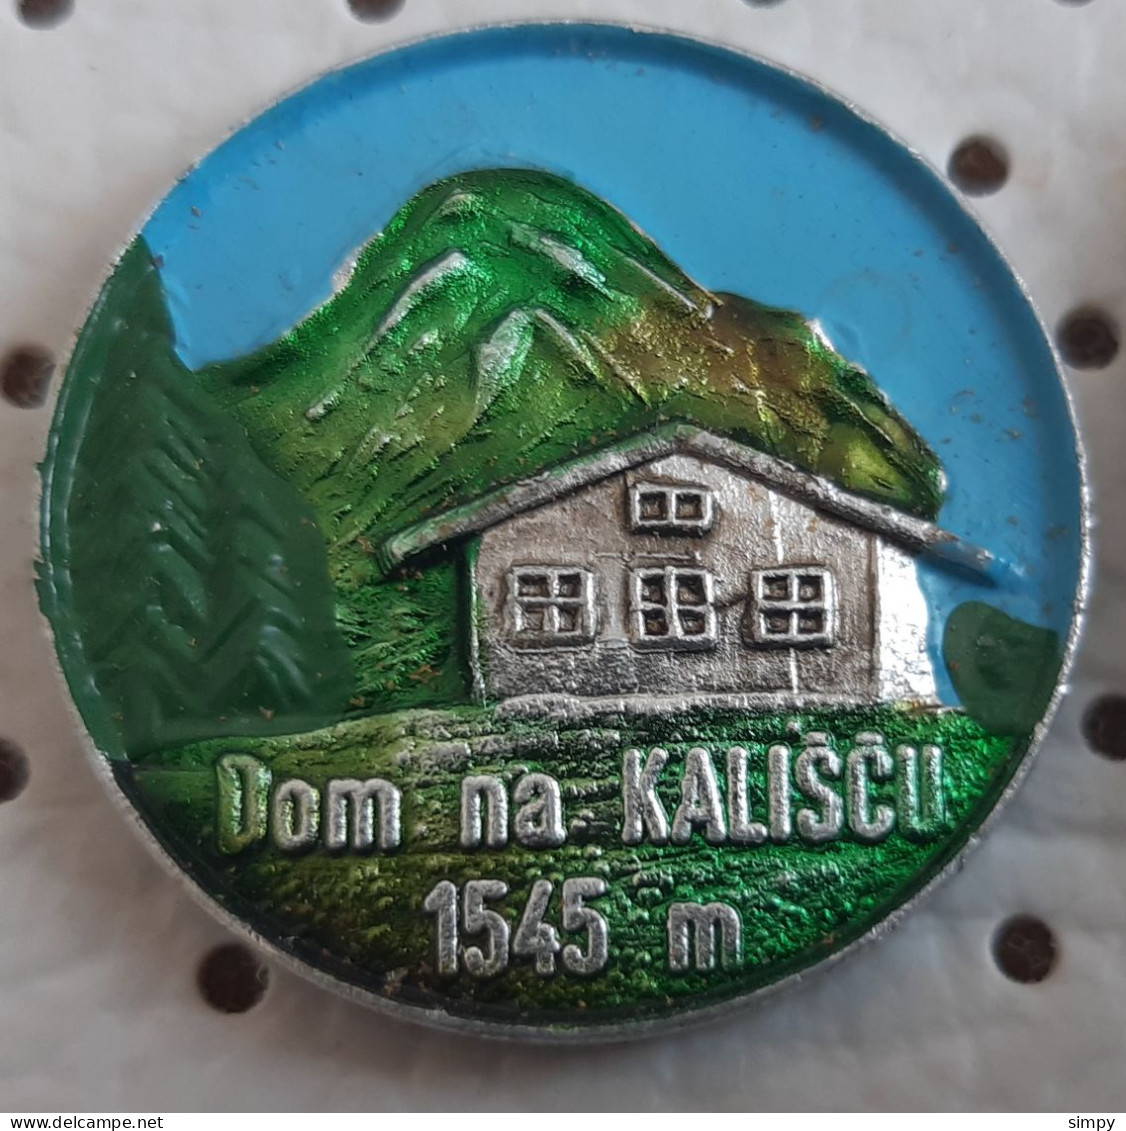 DOm Na Kaliscu  Mountain Lodge Alpinism, Mountaineering Slovenia Pin - Alpinisme